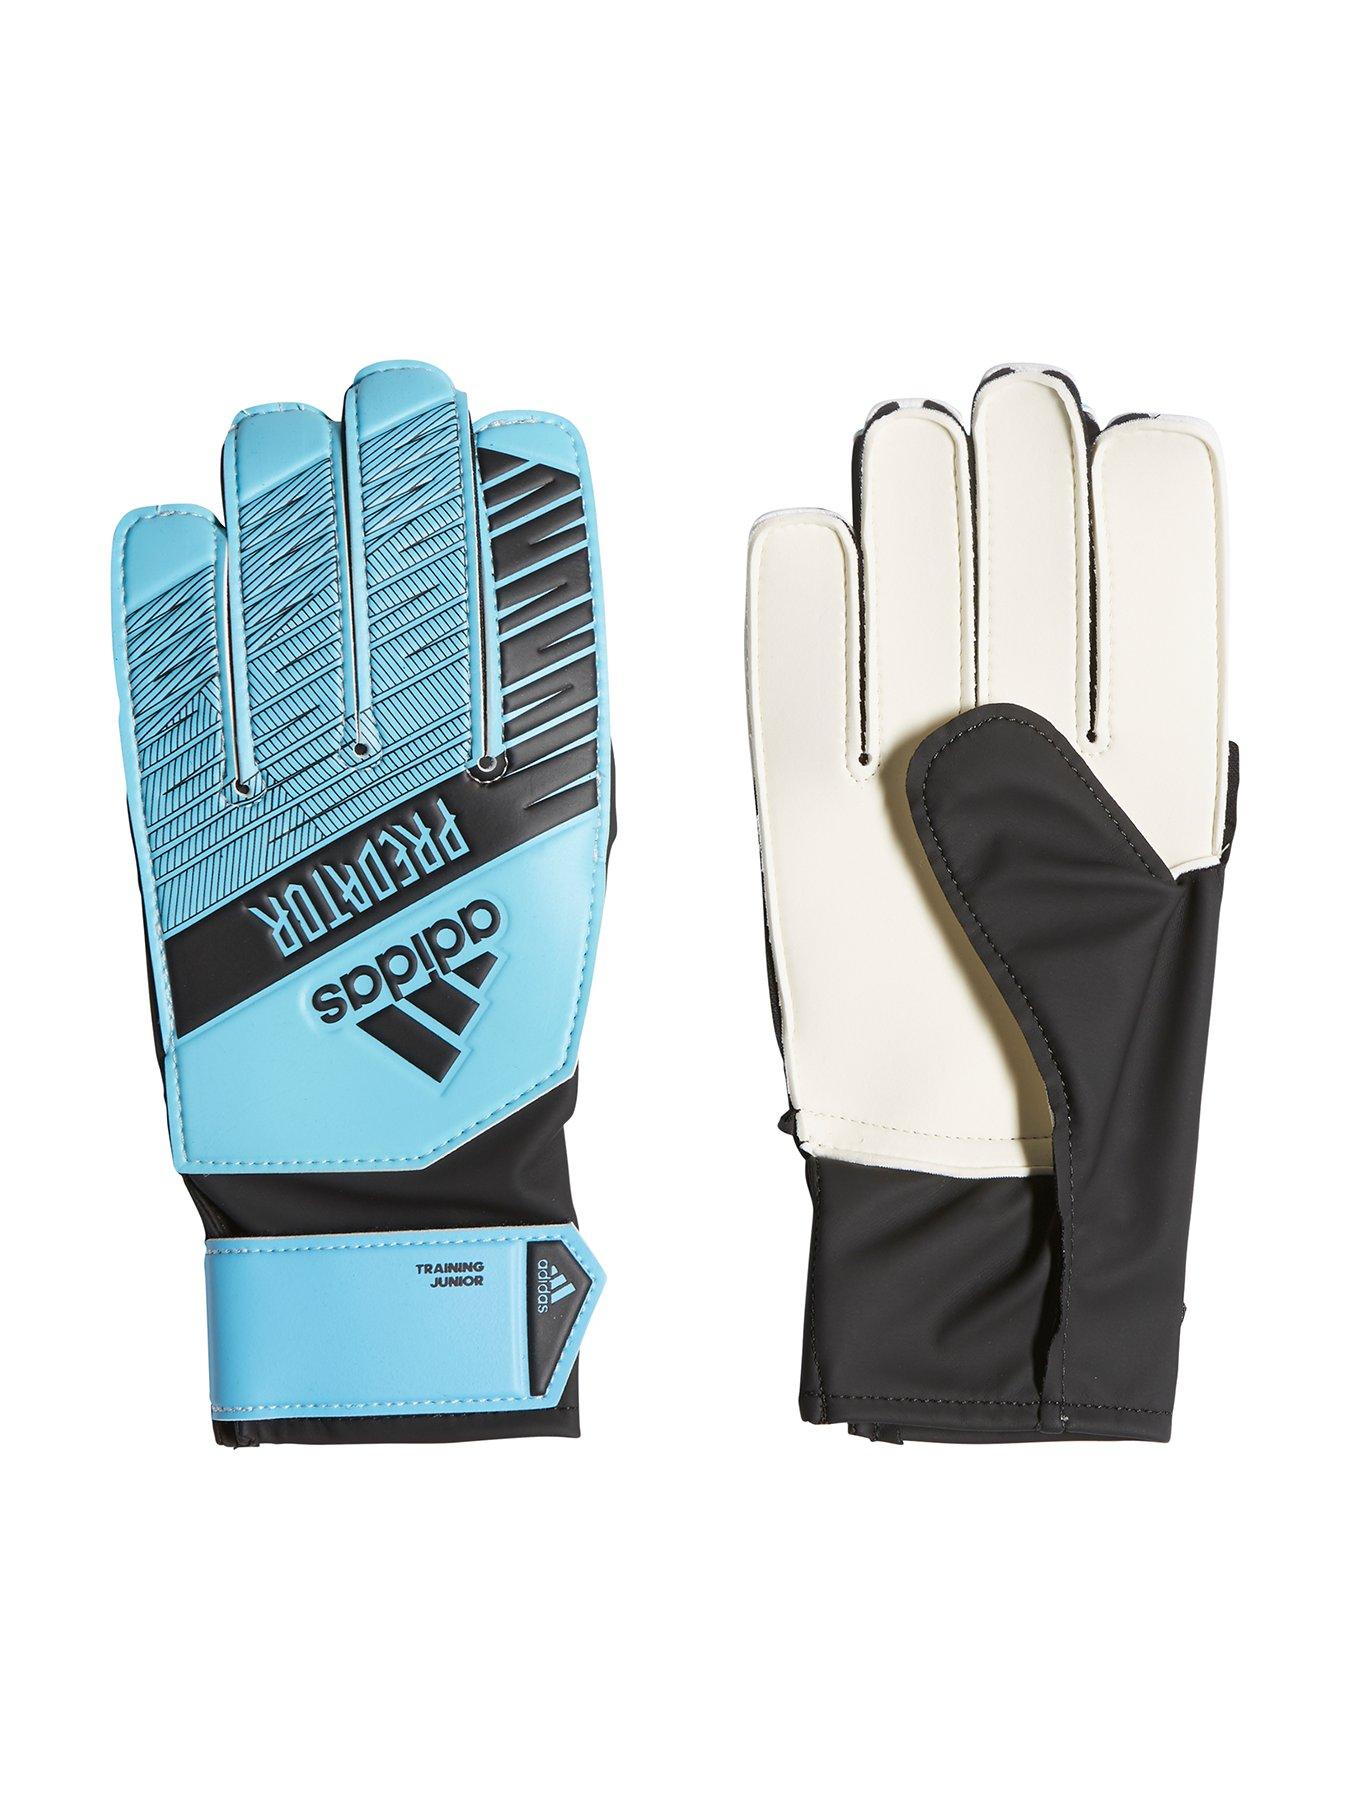 adidas predator fingersave junior soccer goalkeeper gloves